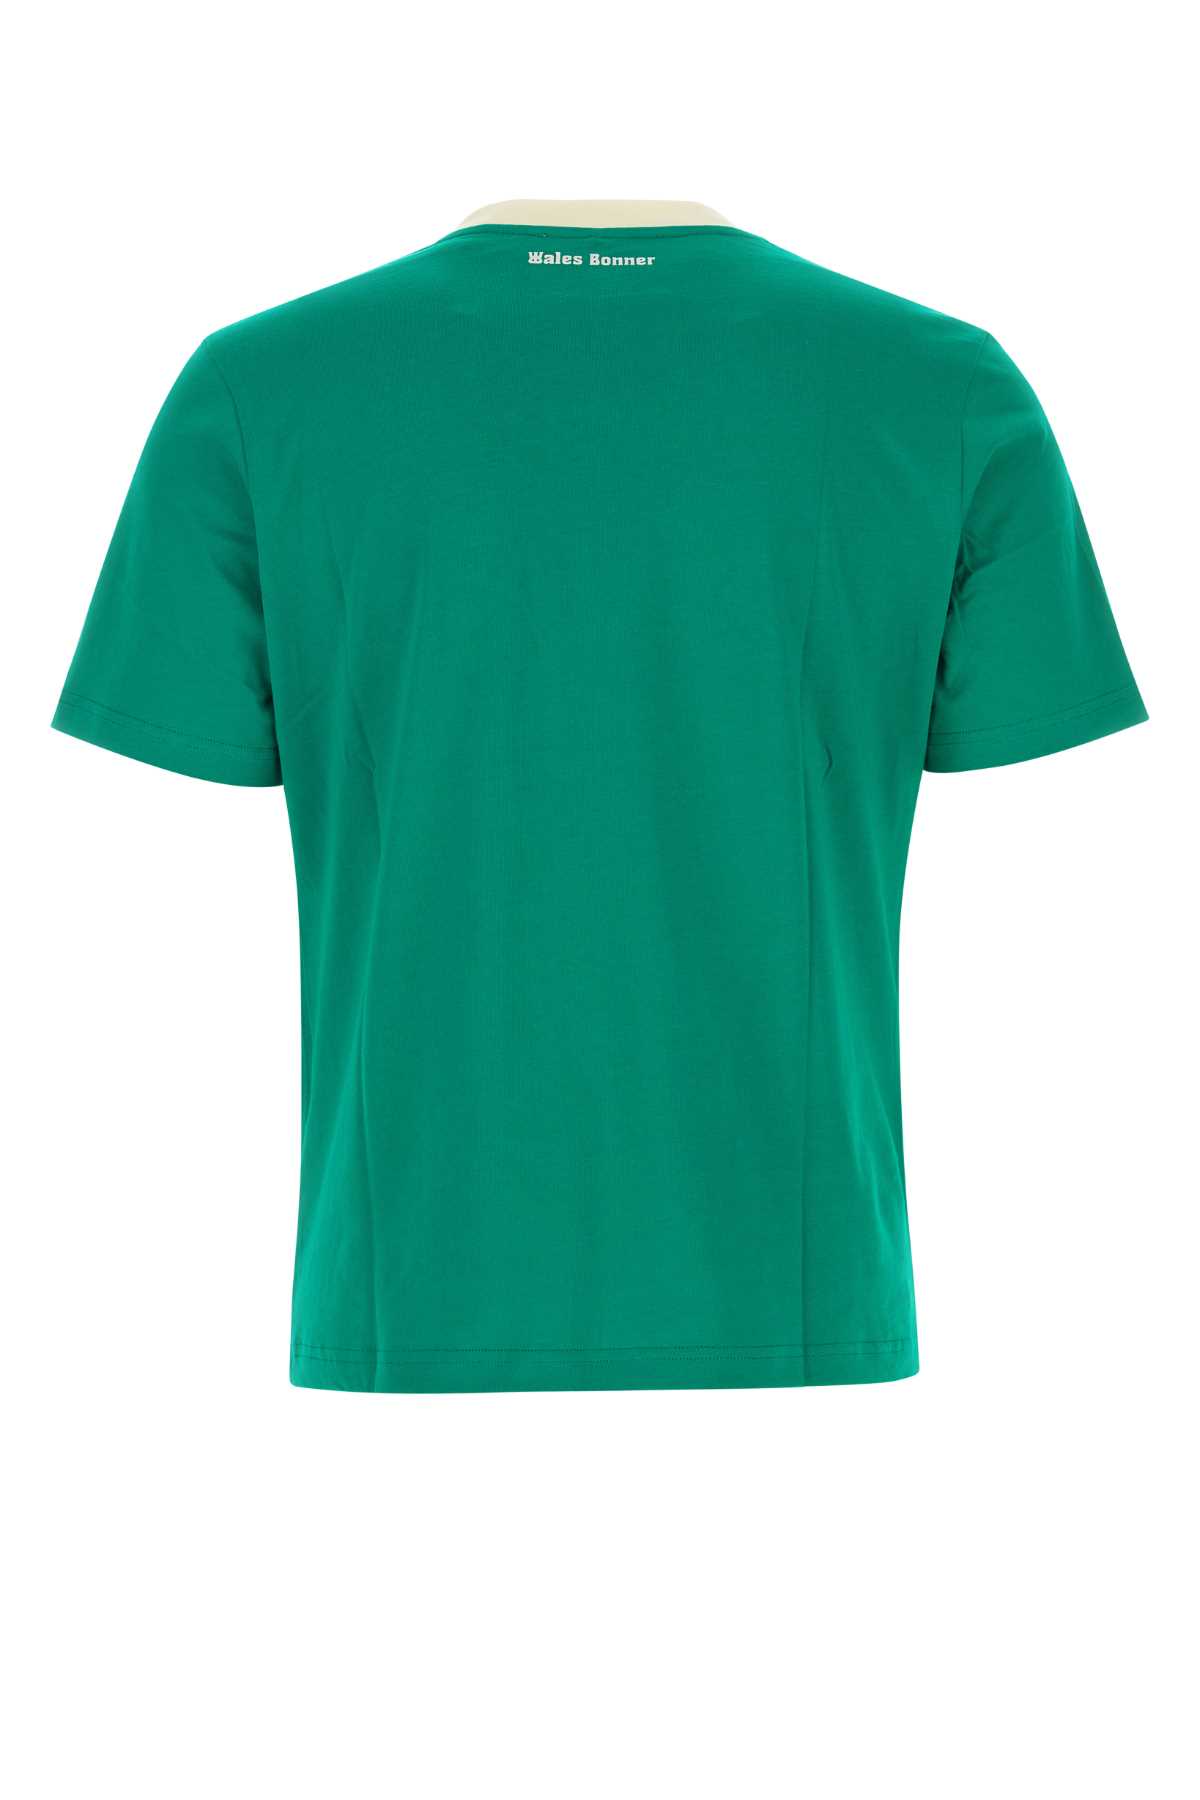 Shop Wales Bonner Green Cotton Resilience T-shirt